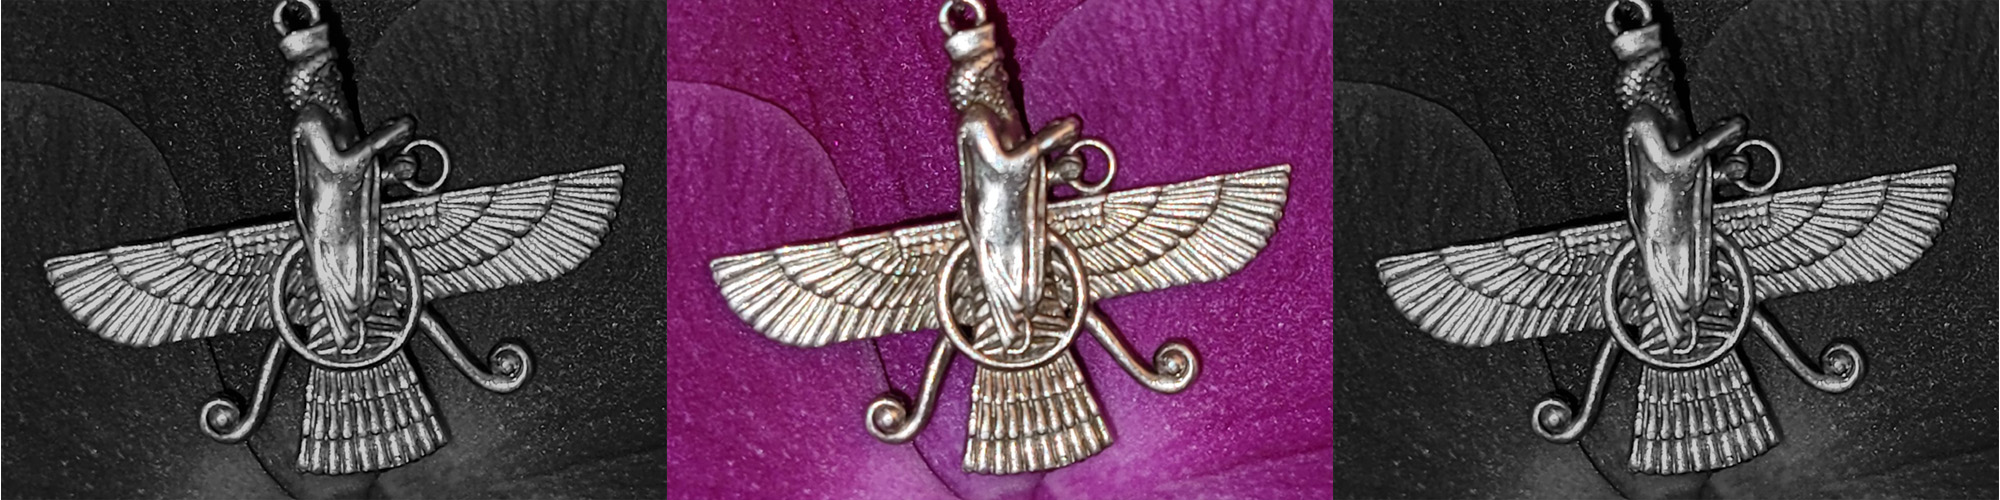 Zoroastrian Association of Florida